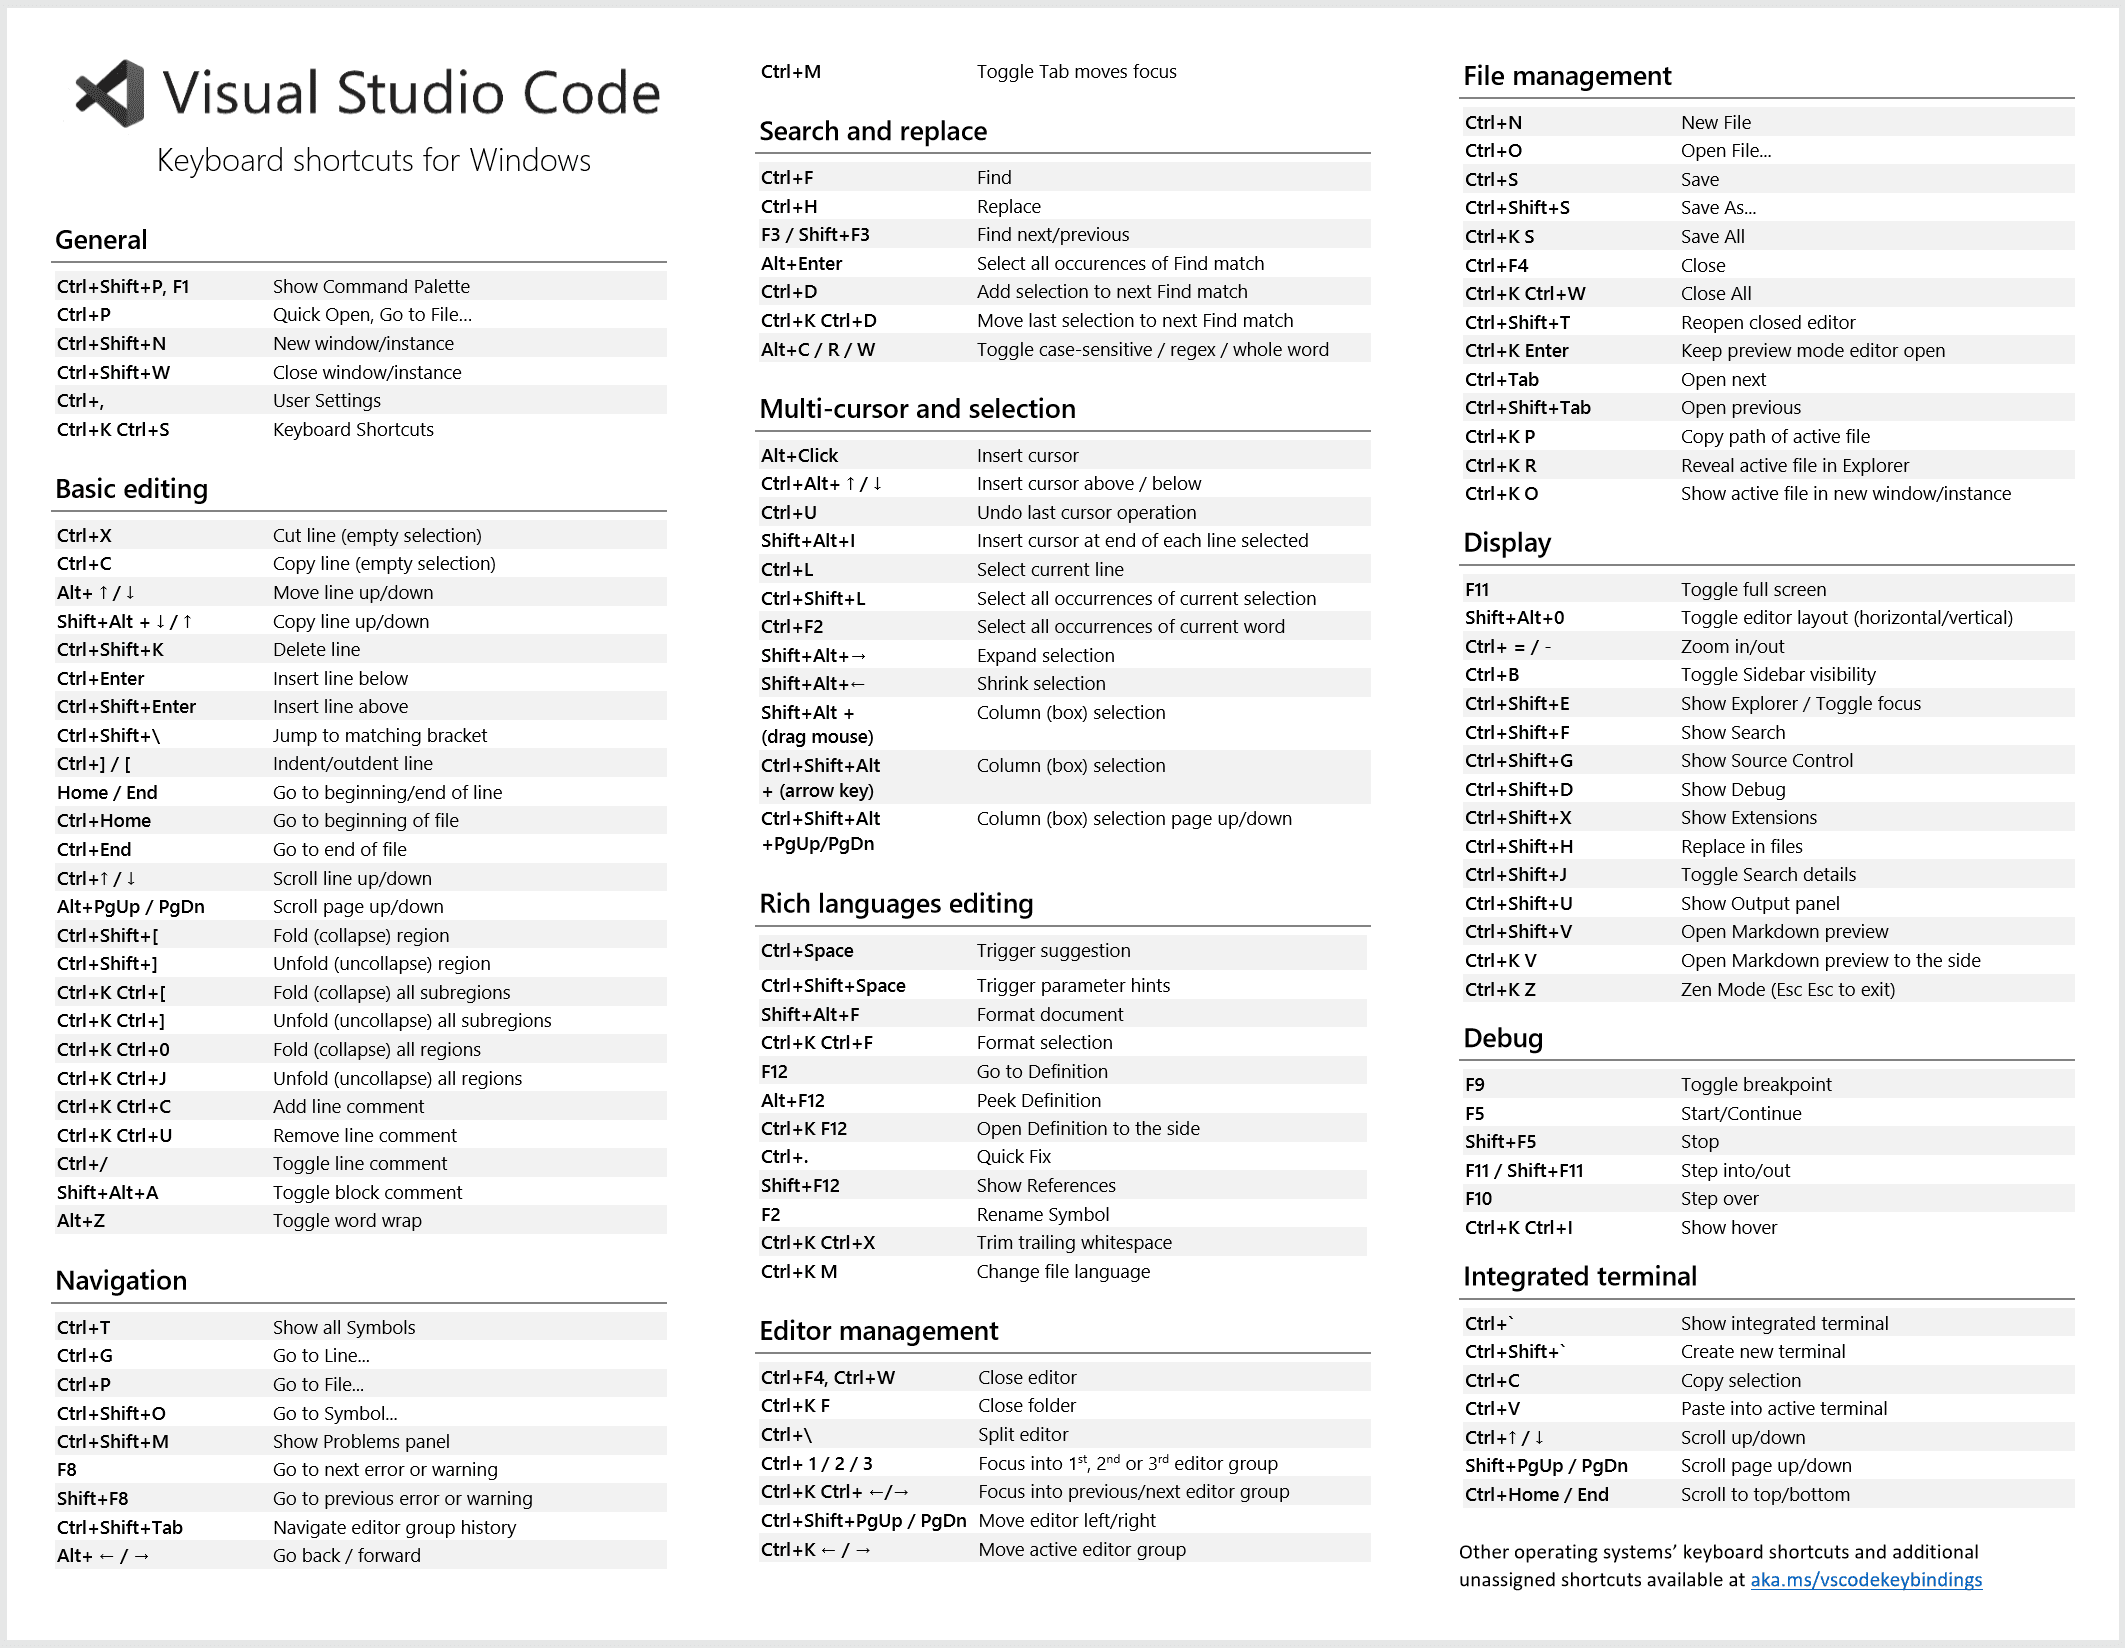 Keyboard Reference Sheet